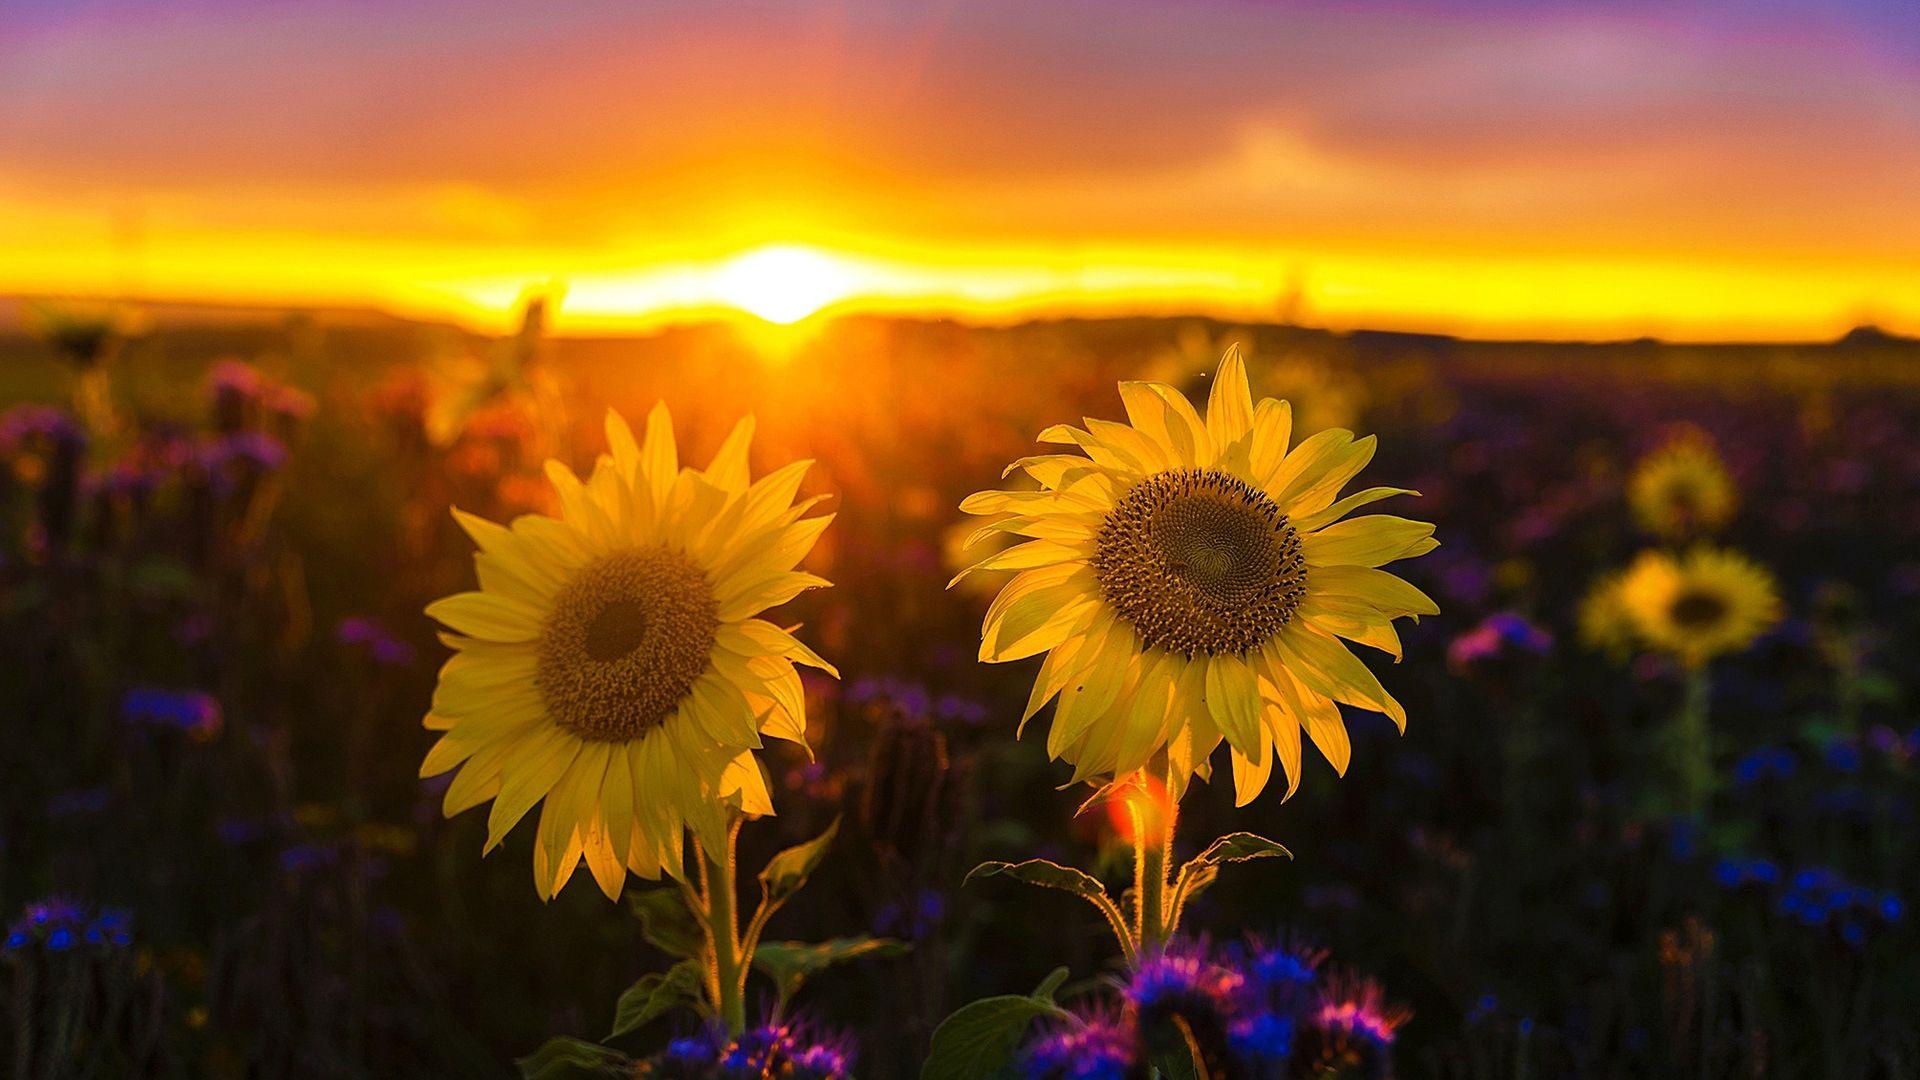 Mobile wallpaper Sunset Field Mood Sunflower Women Lisa Chelnokova  992343 download the picture for free